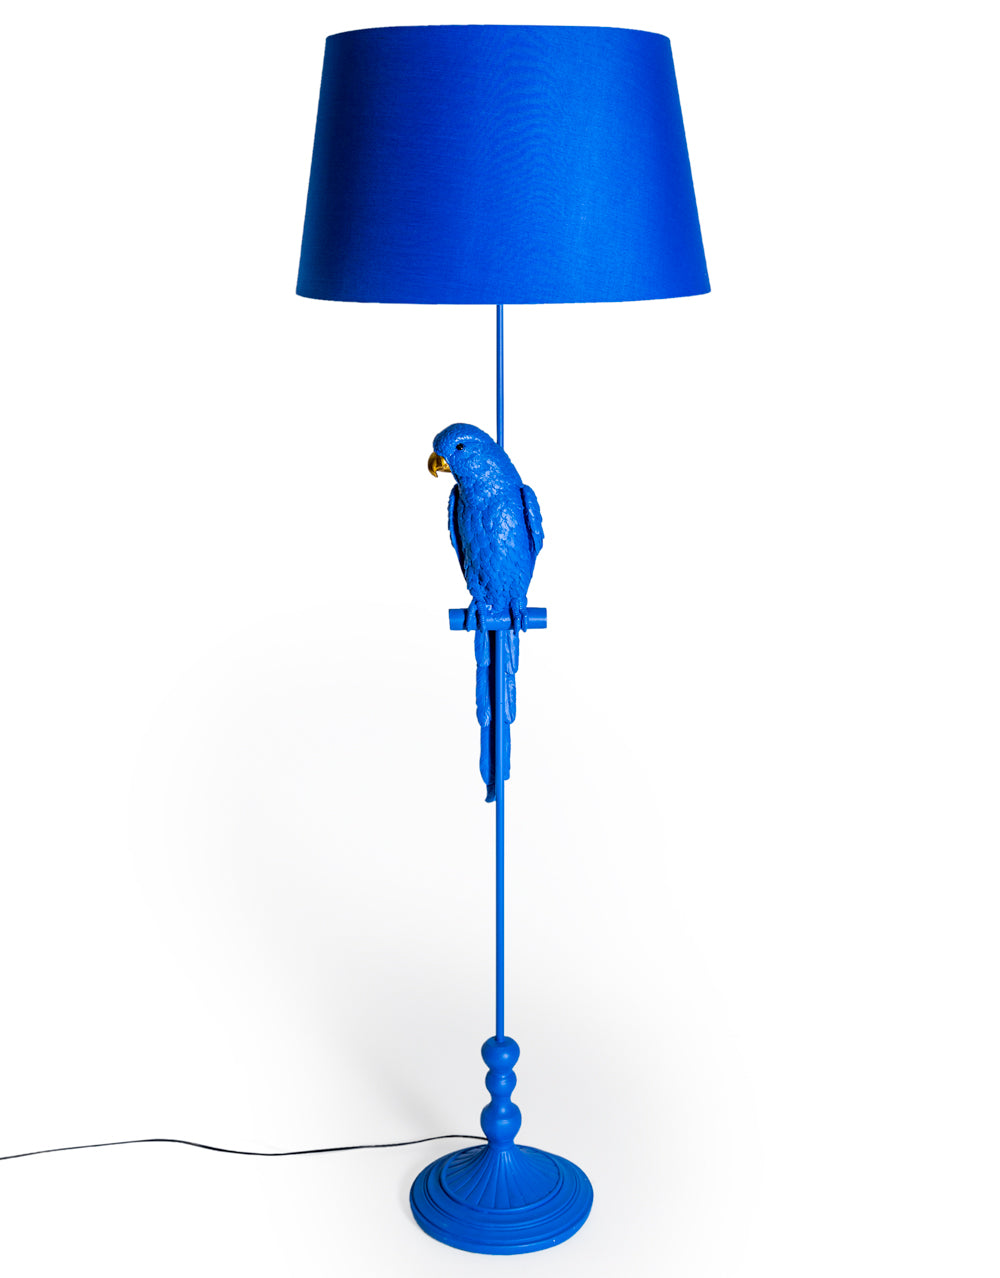 Matt Blue Parrot Floor Lamp with Blue Shade